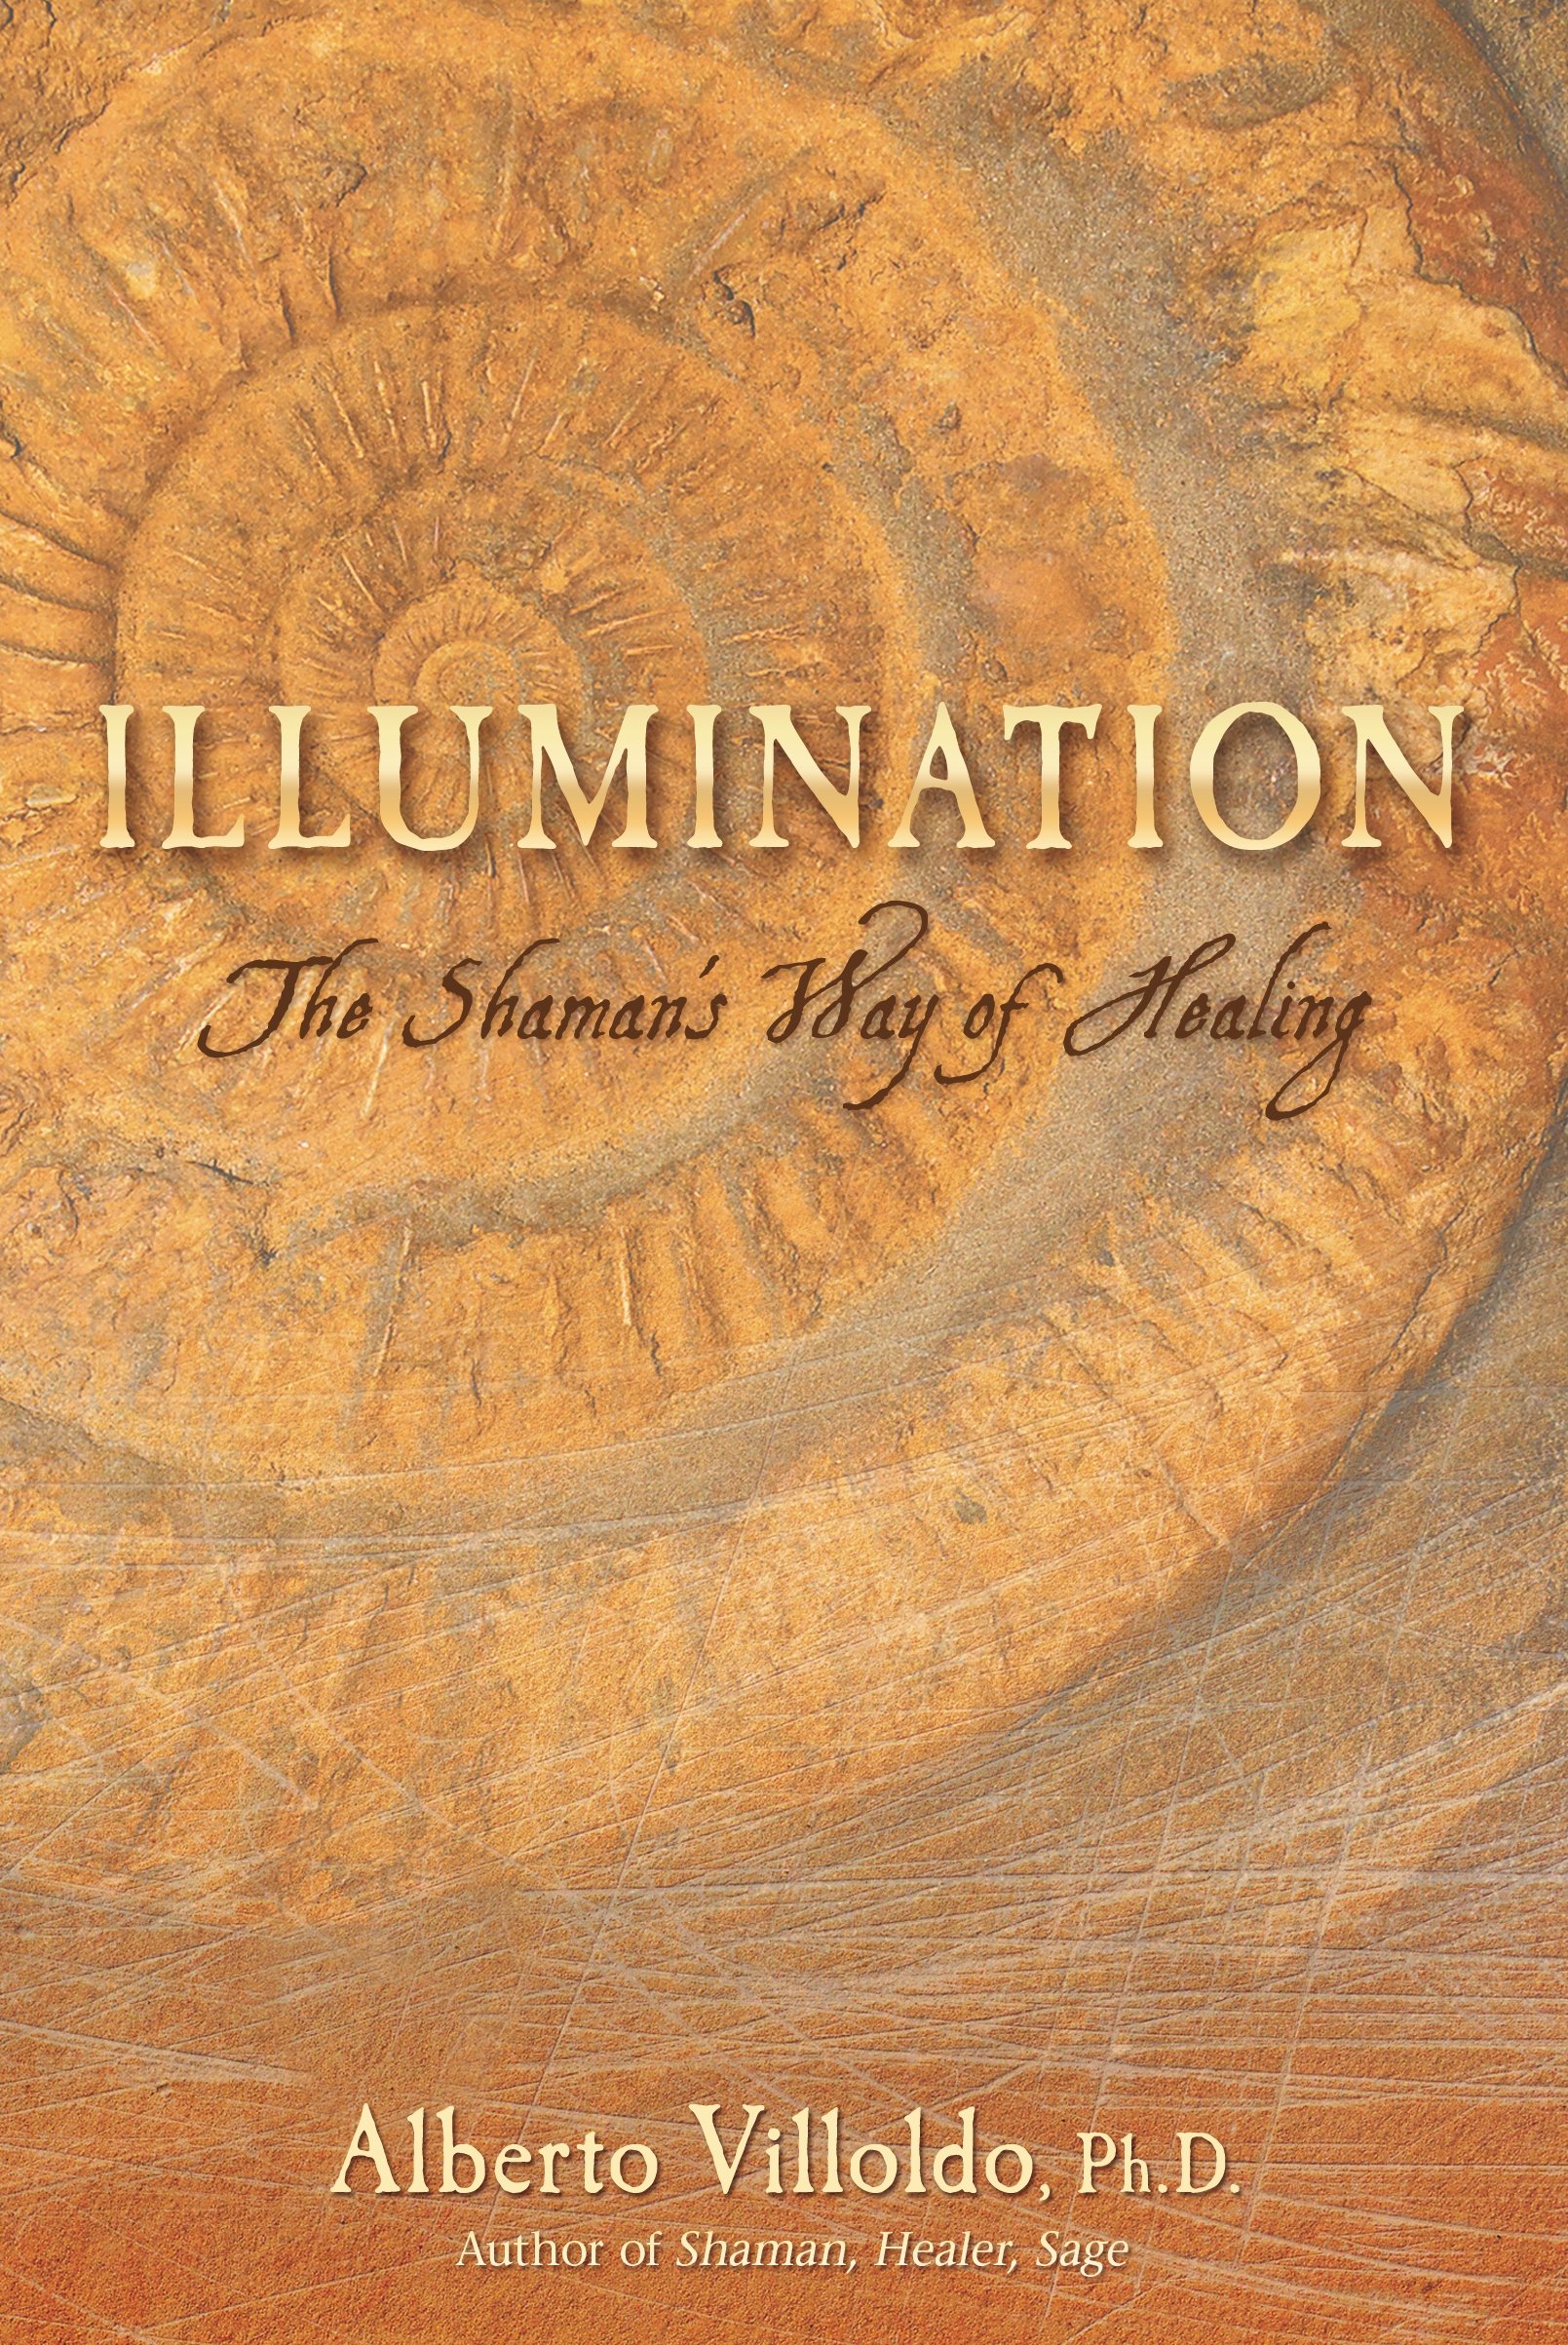 Alberto Villoldo - The Shamans Way of Healing